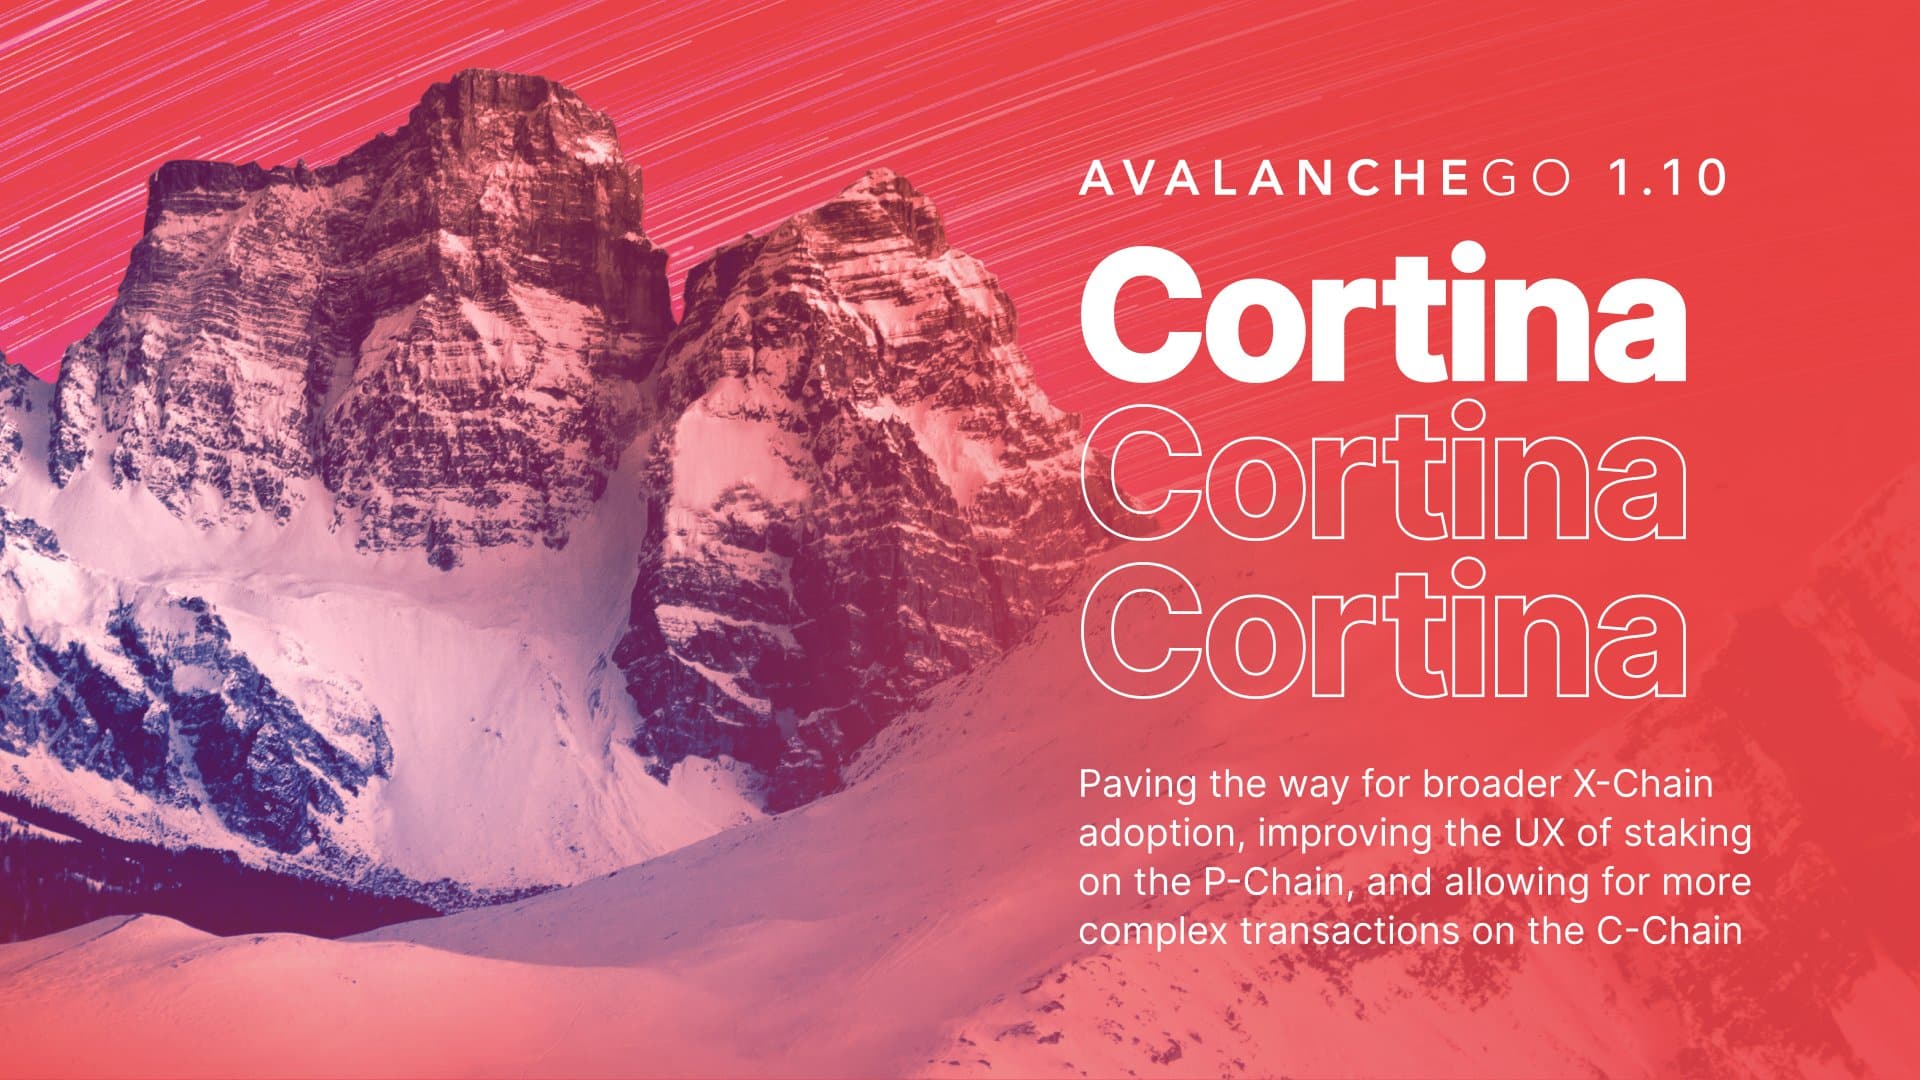 Avalanche Cortina Upgrade